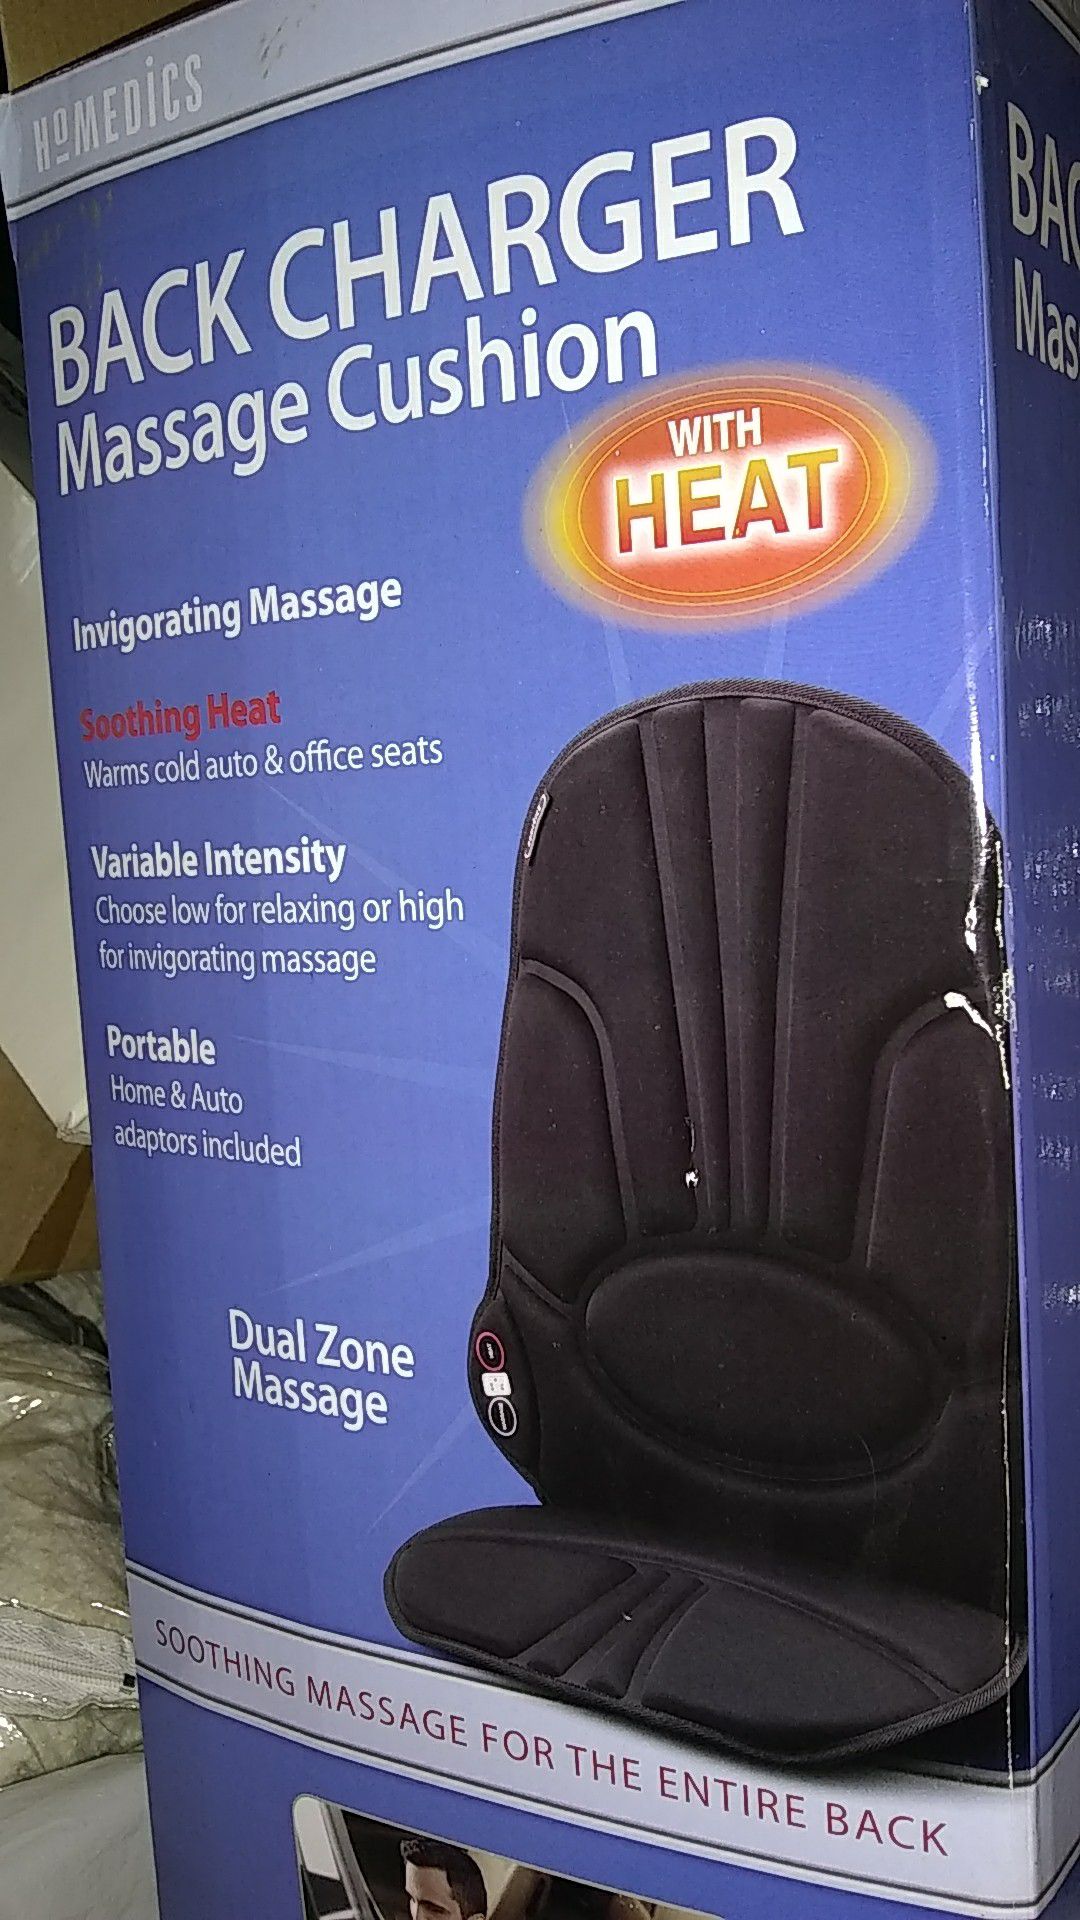 Homedics back charger massage cushion for Sale in Flint, MI - OfferUp